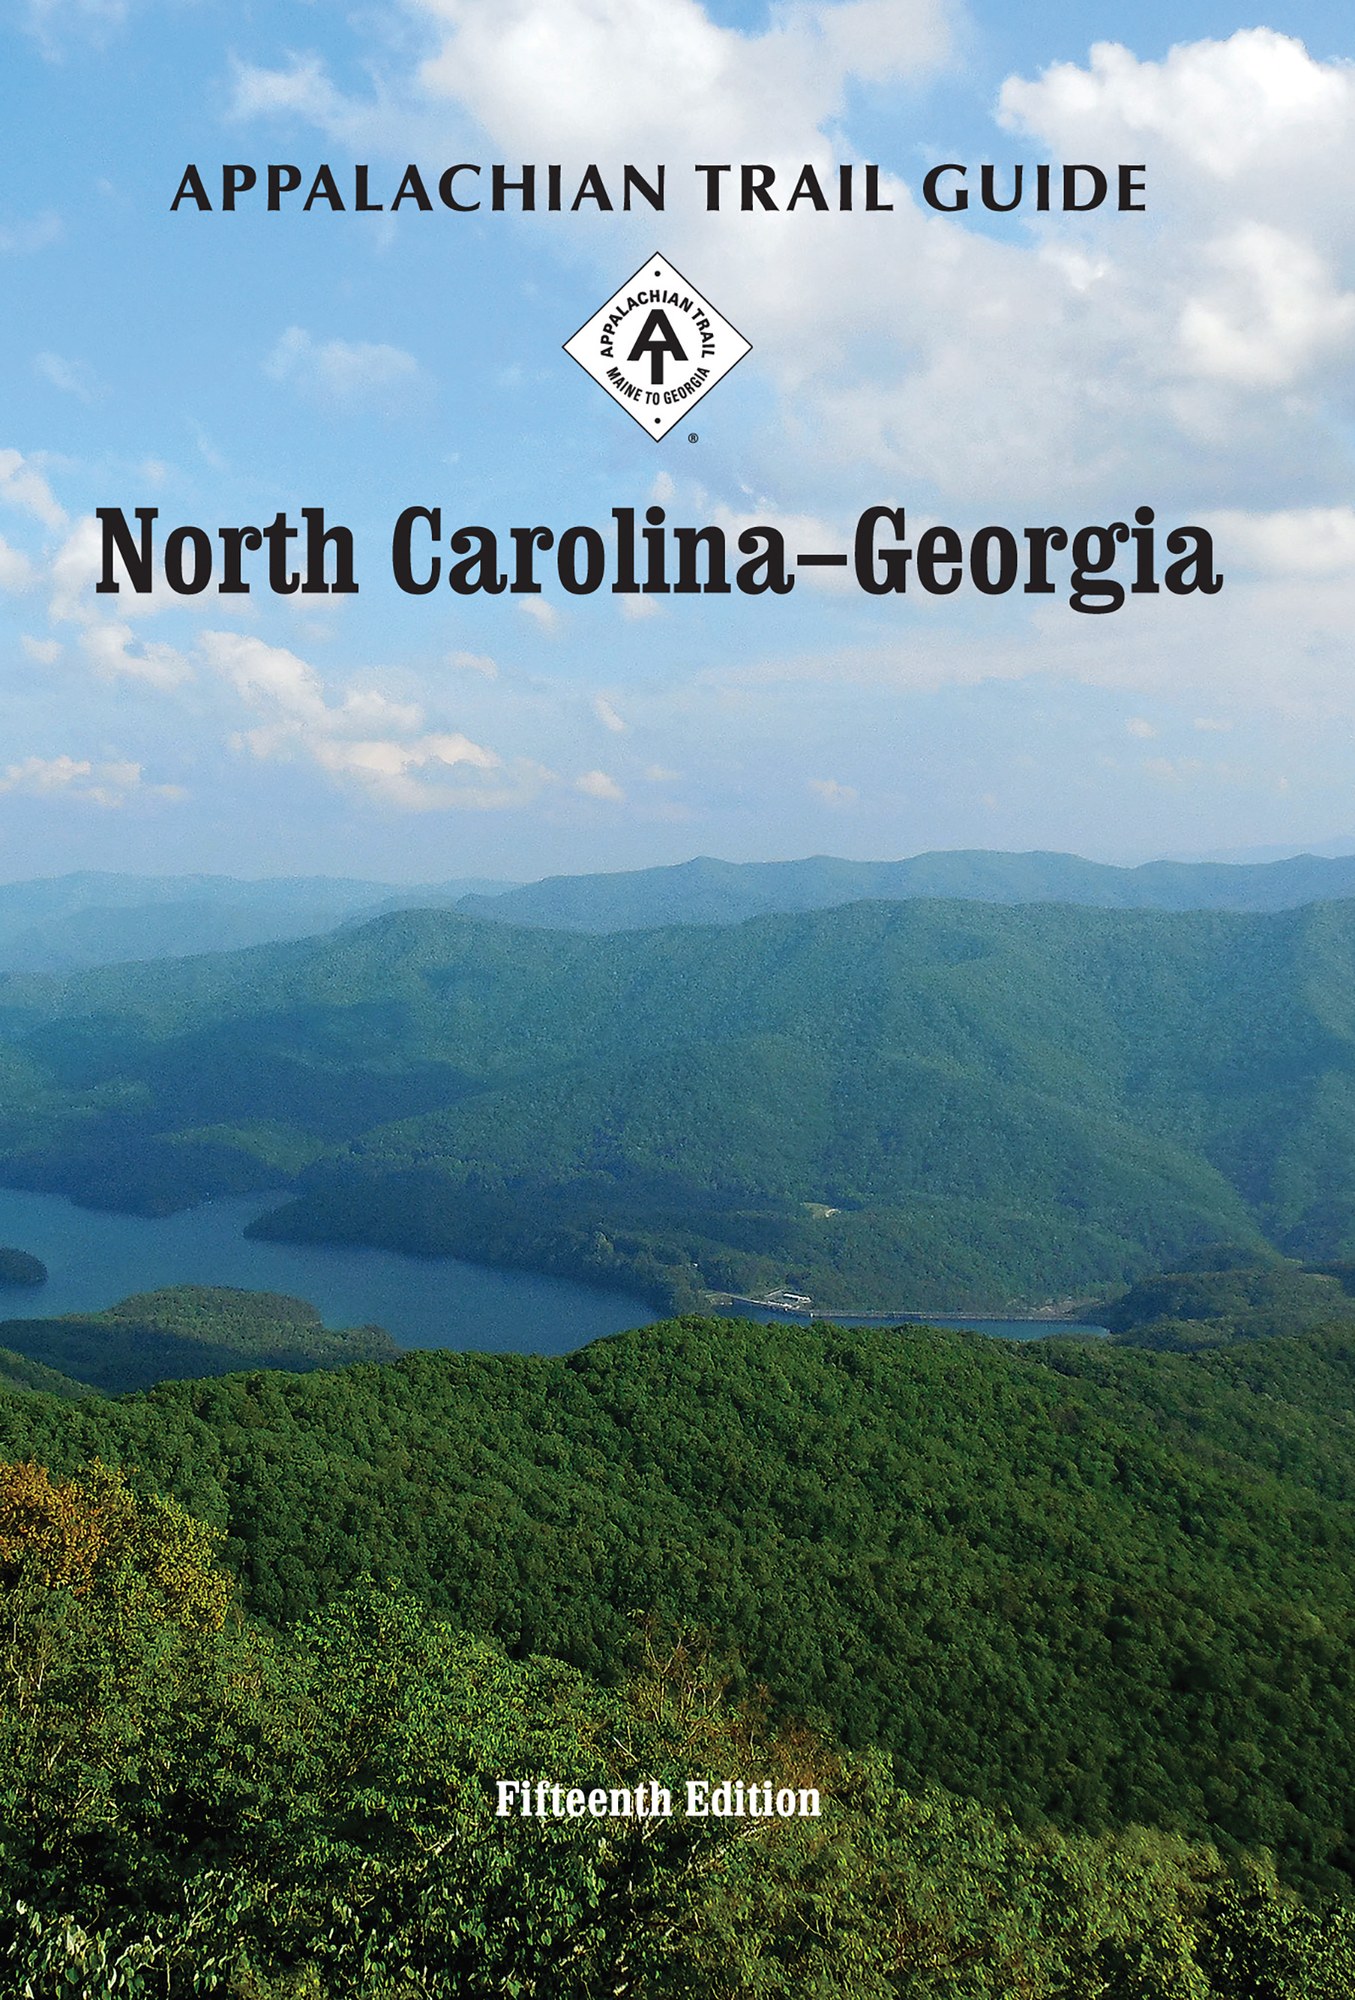 Appalachian Trail Guide to North Carolina-Georgia Book and Maps Set